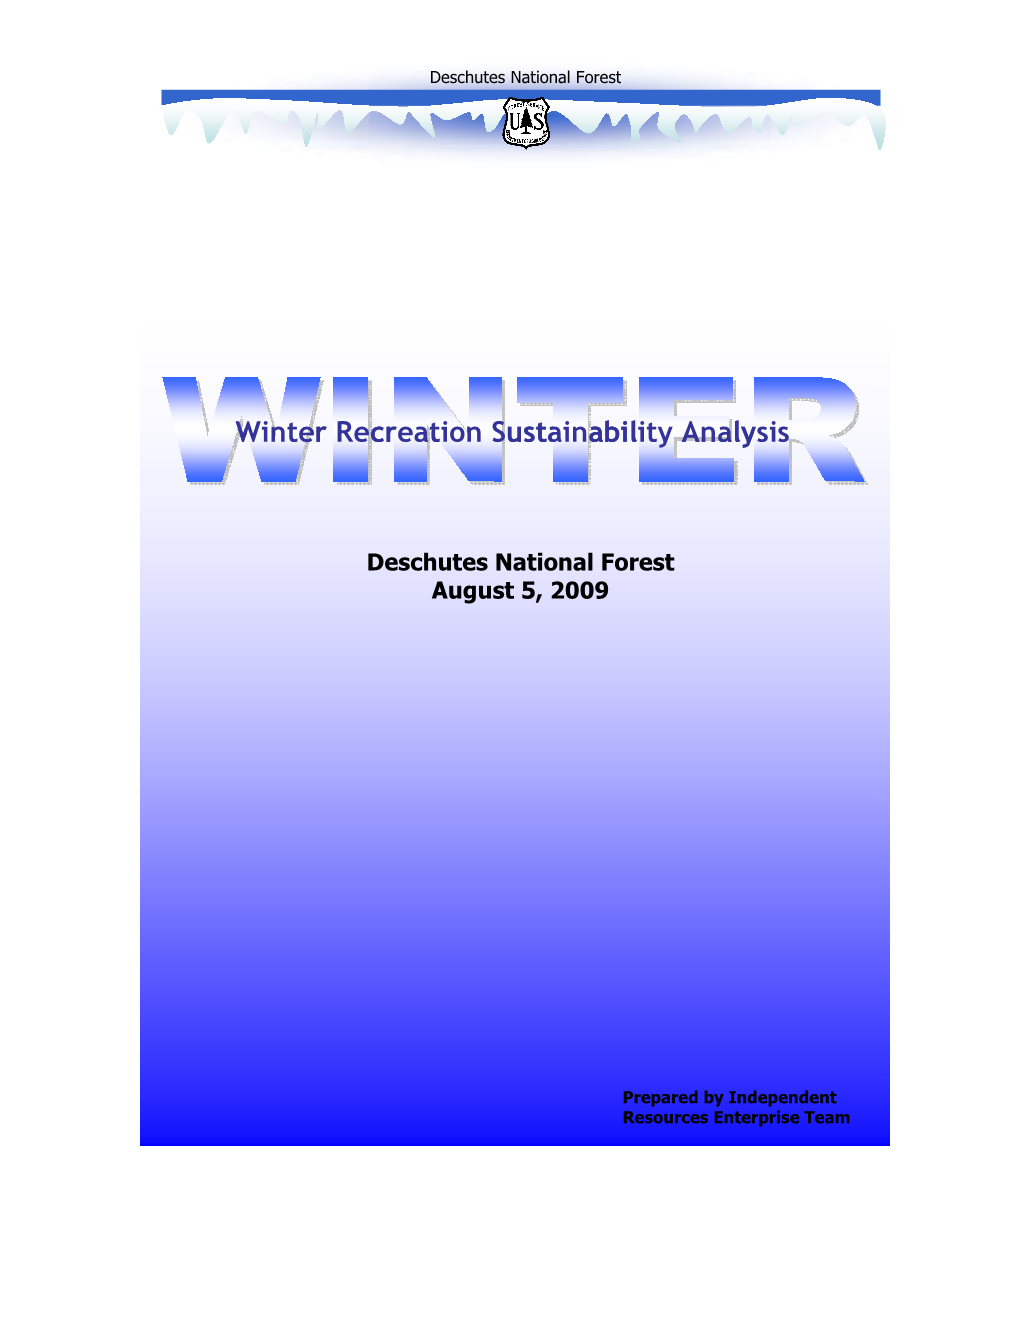 Winter Recreation Sustainability Analysis